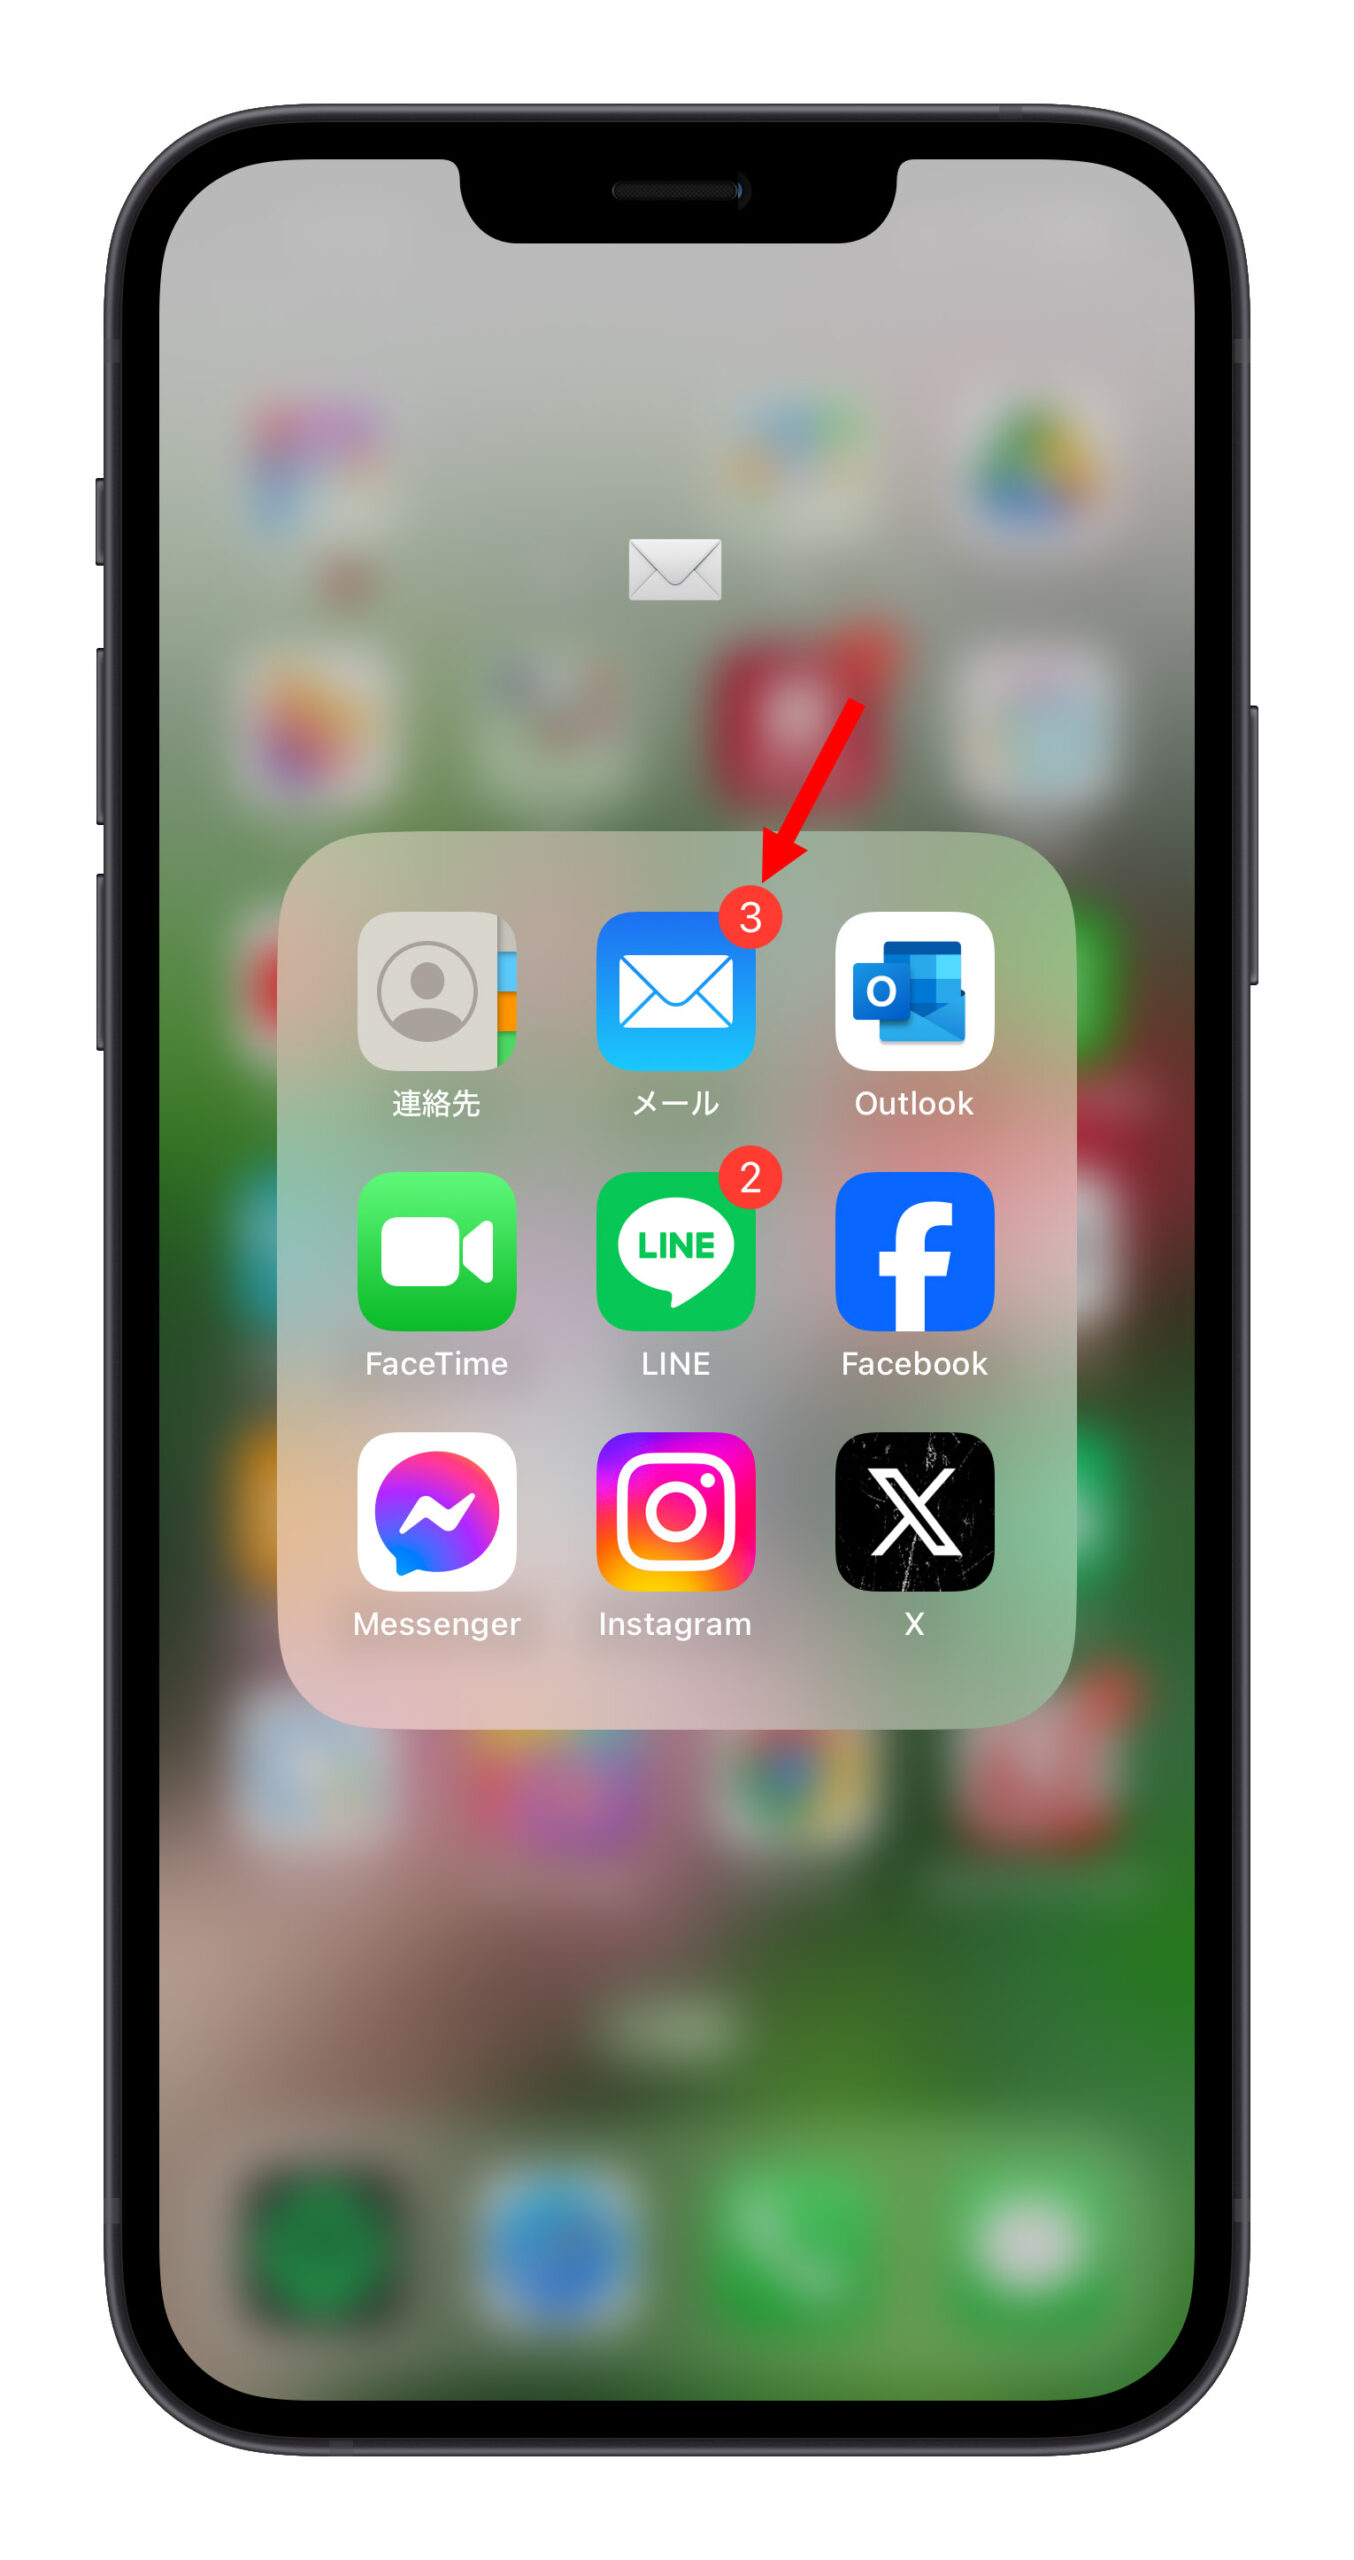 iPhone アプリ 右上 赤い丸 赤丸 バッジ 通知 消す方法